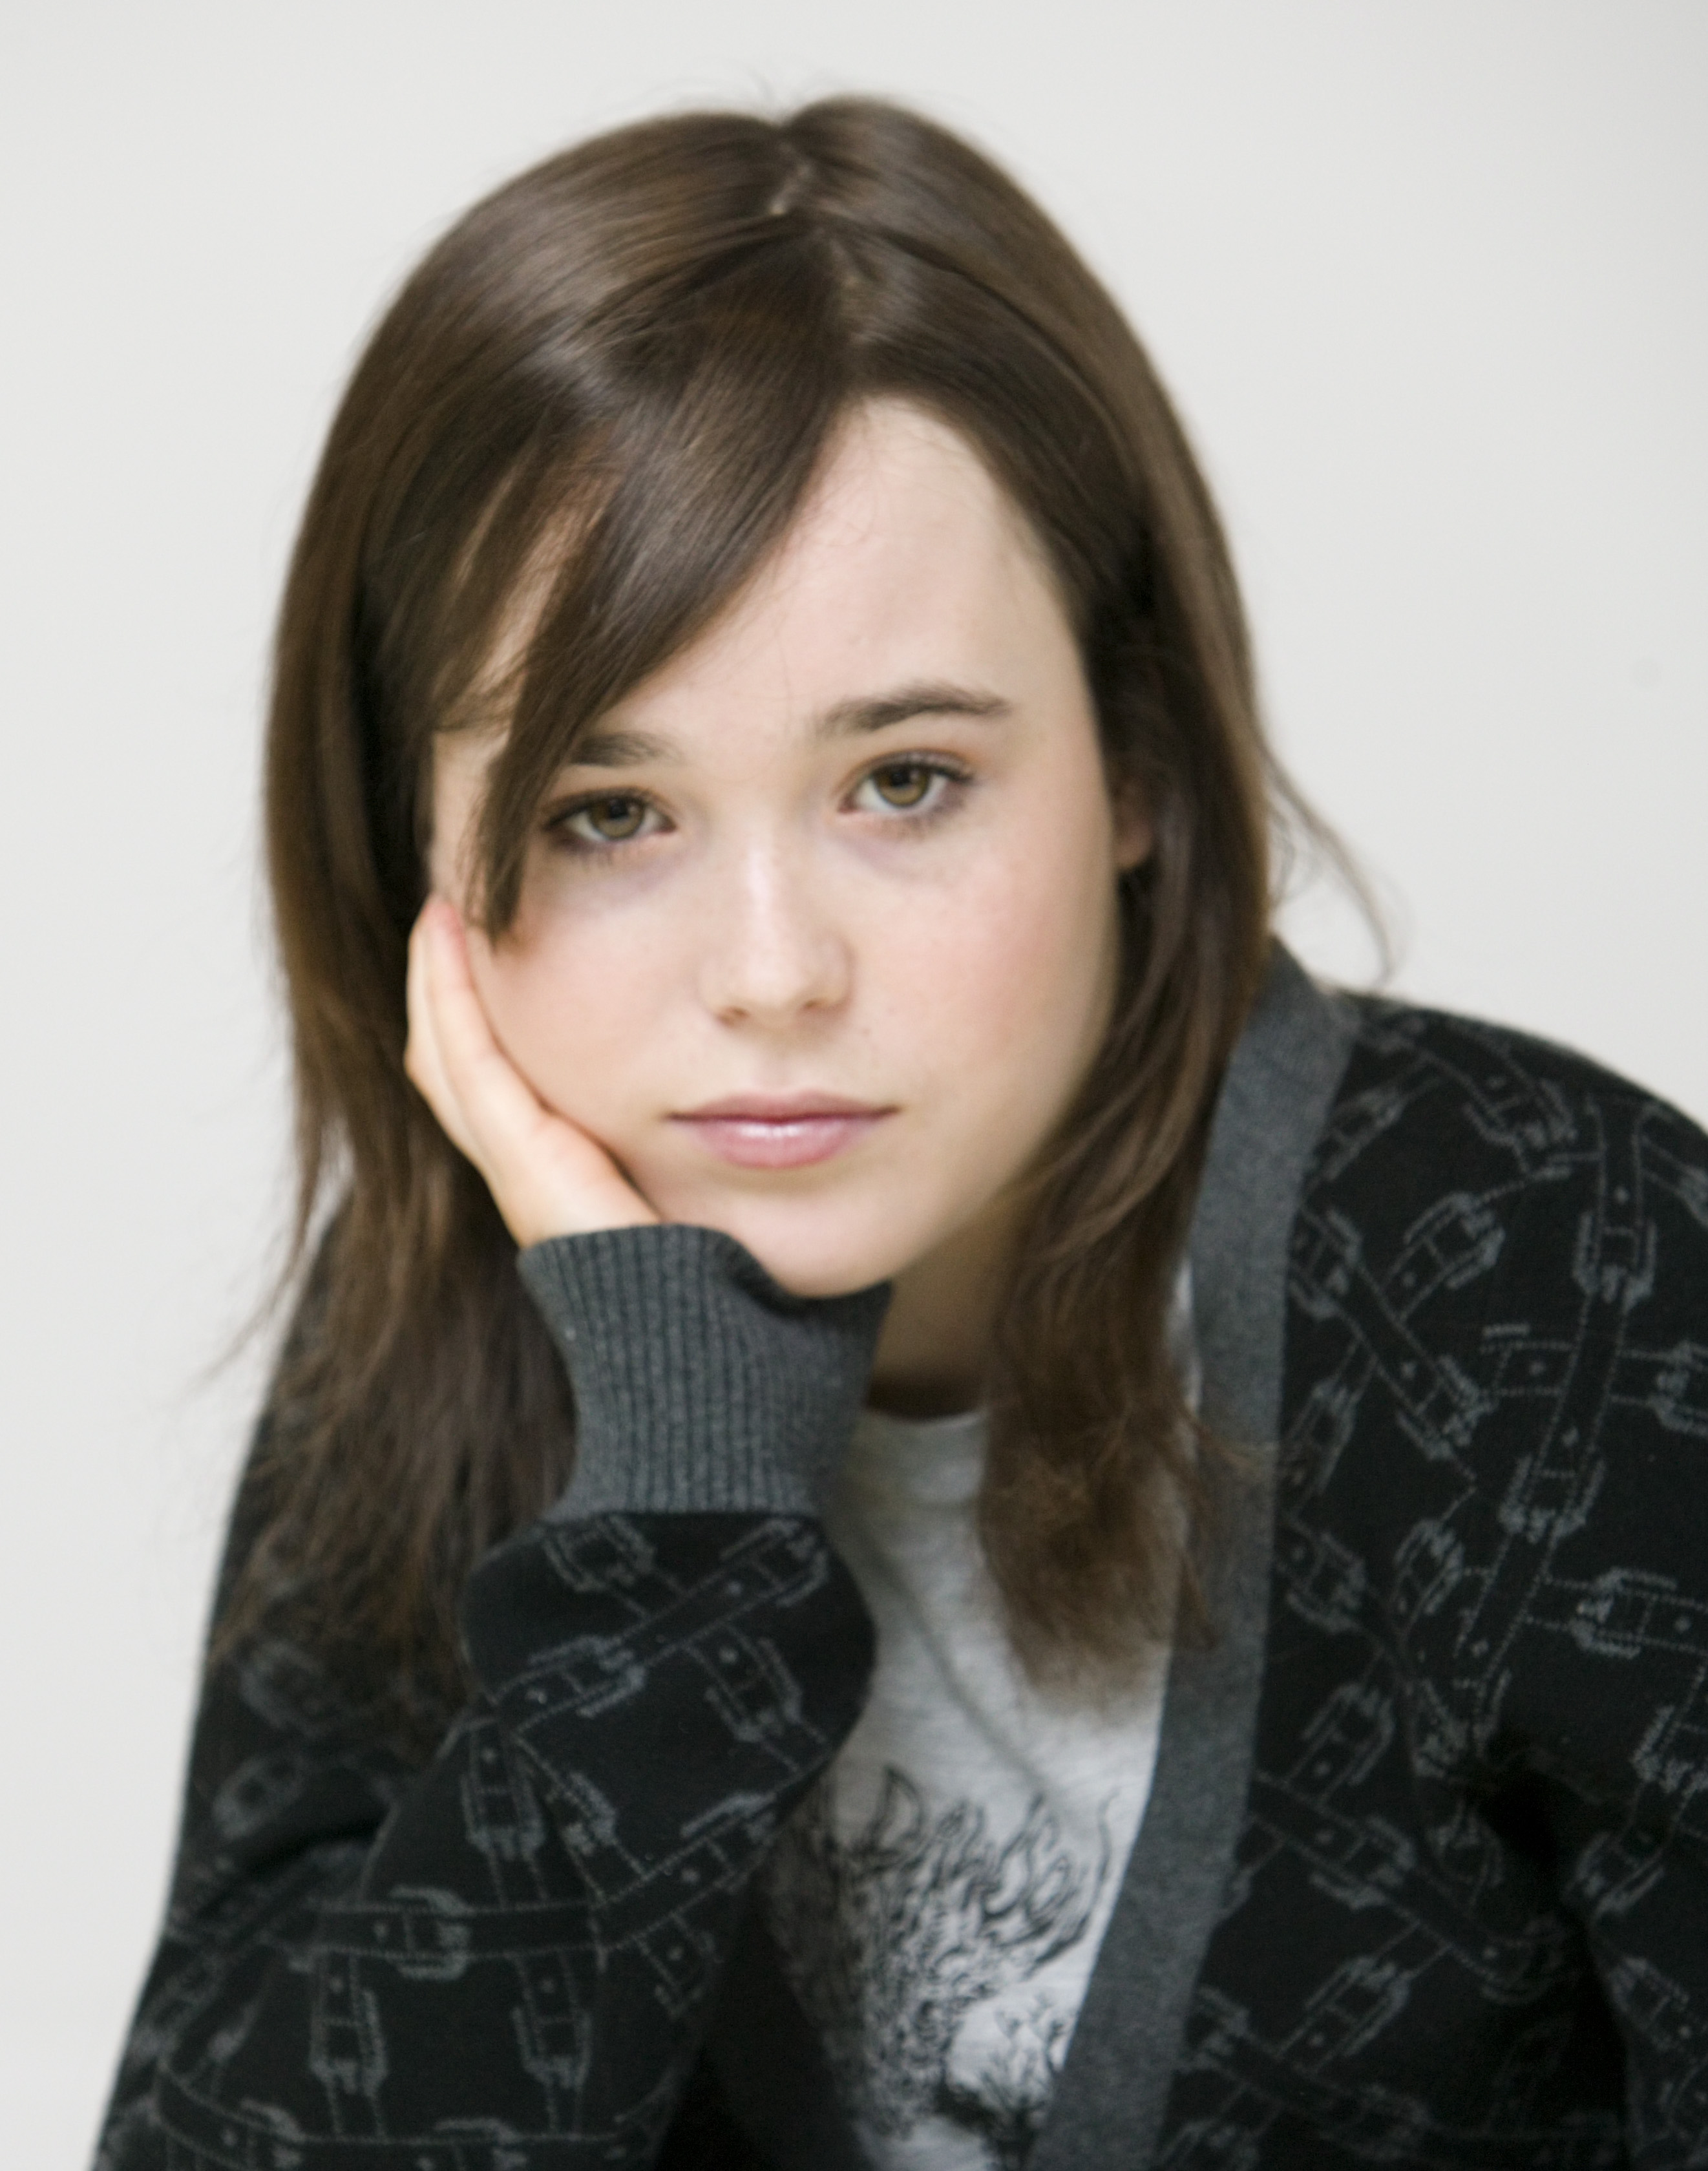 Ellen Page - desktop wallpaper